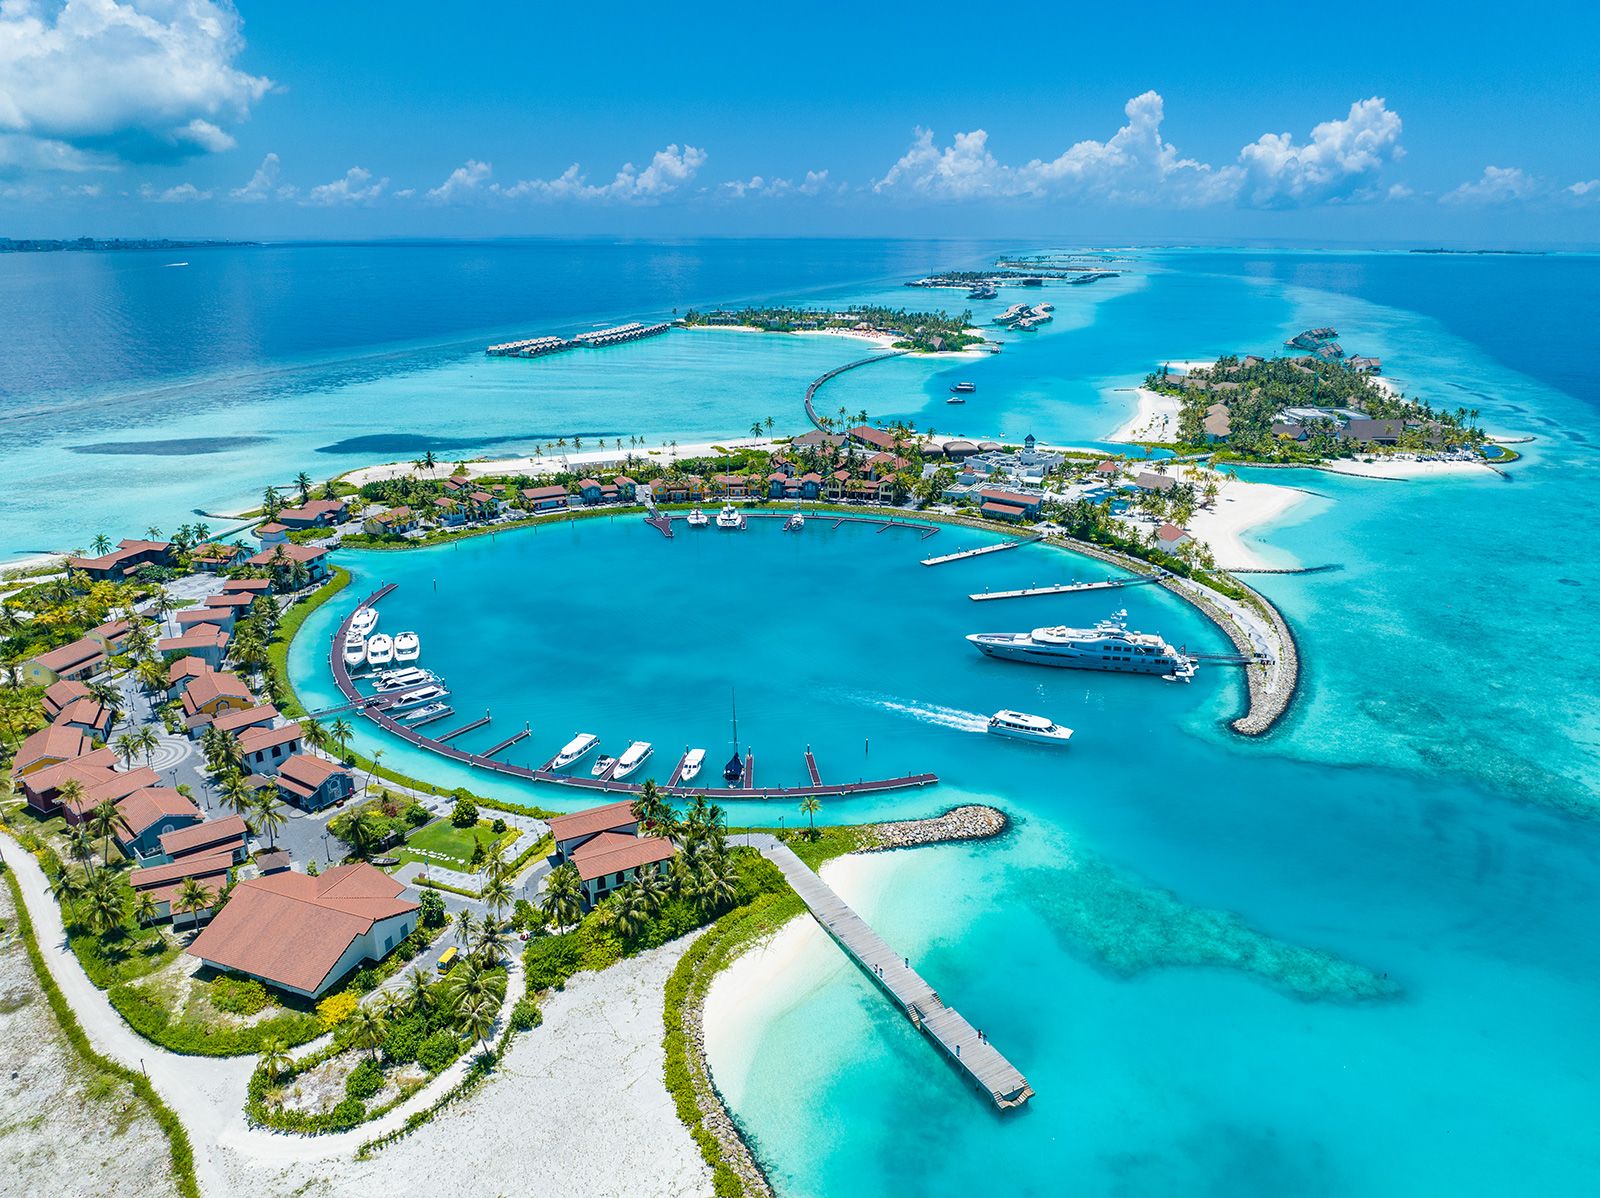 CROSSROADS Maldives: Inside the country's first multi-island destination |  CNN